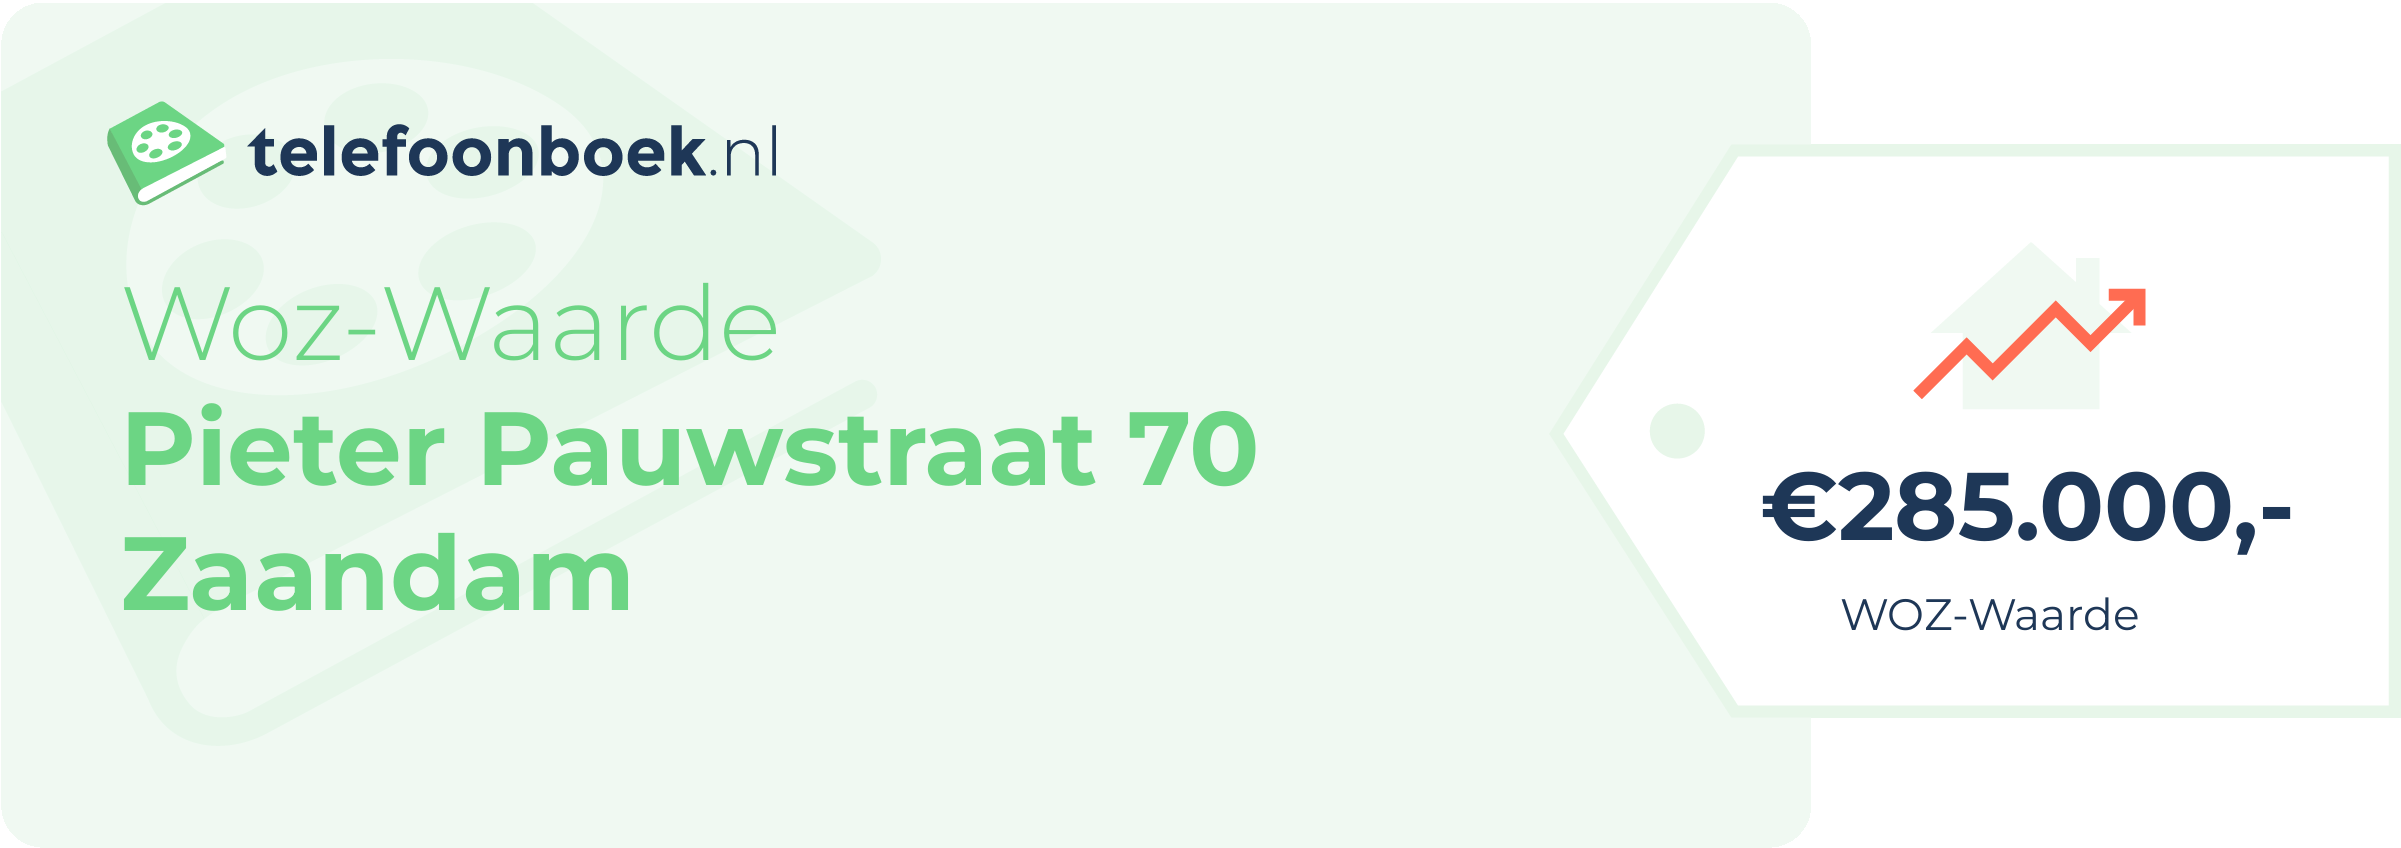 WOZ-waarde Pieter Pauwstraat 70 Zaandam